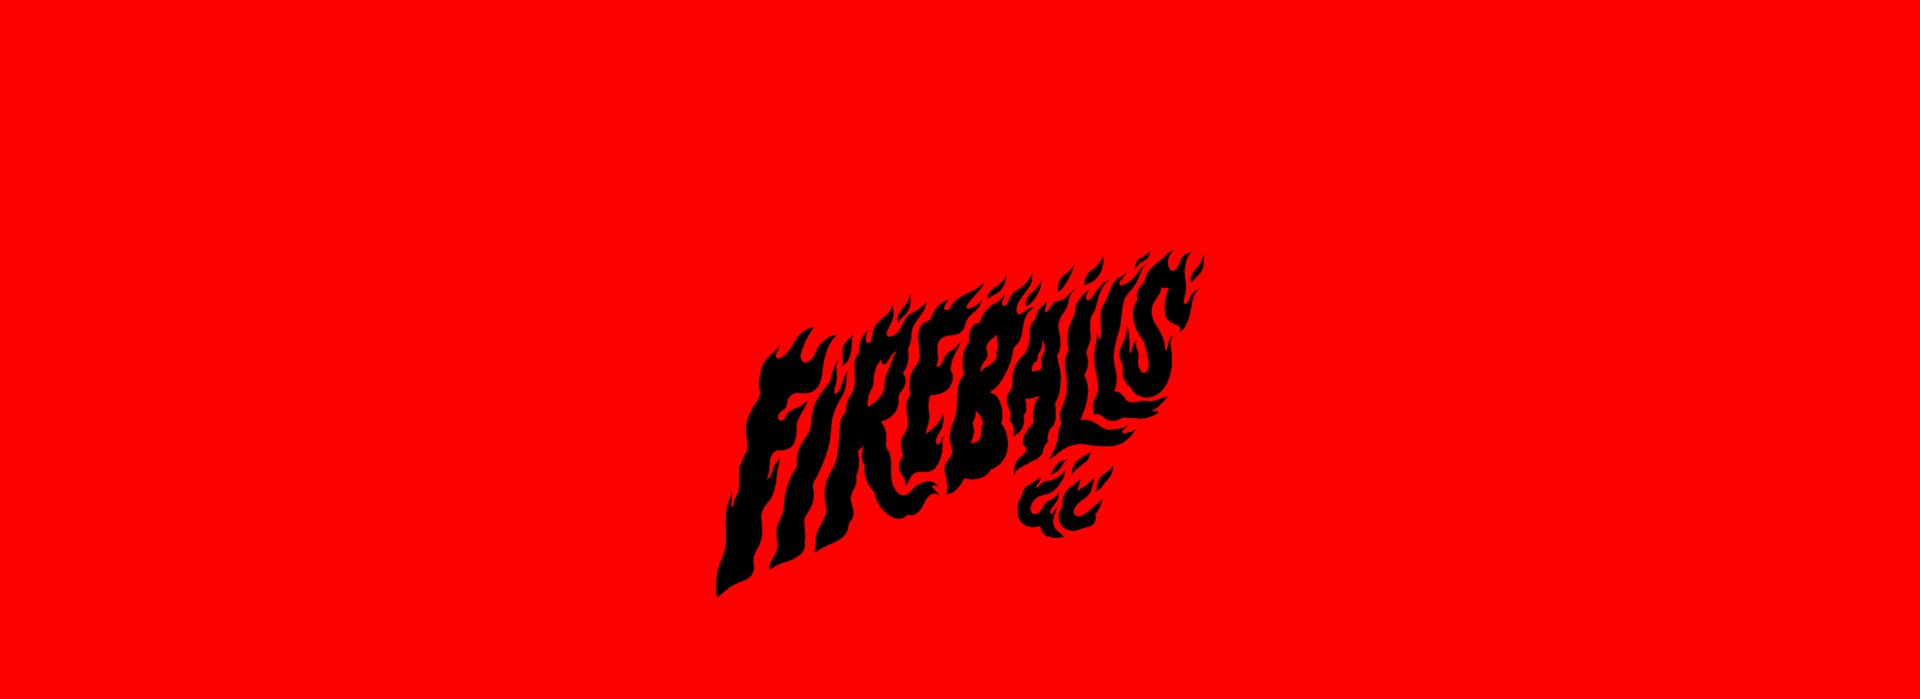 Fireballs-GC Wordmark